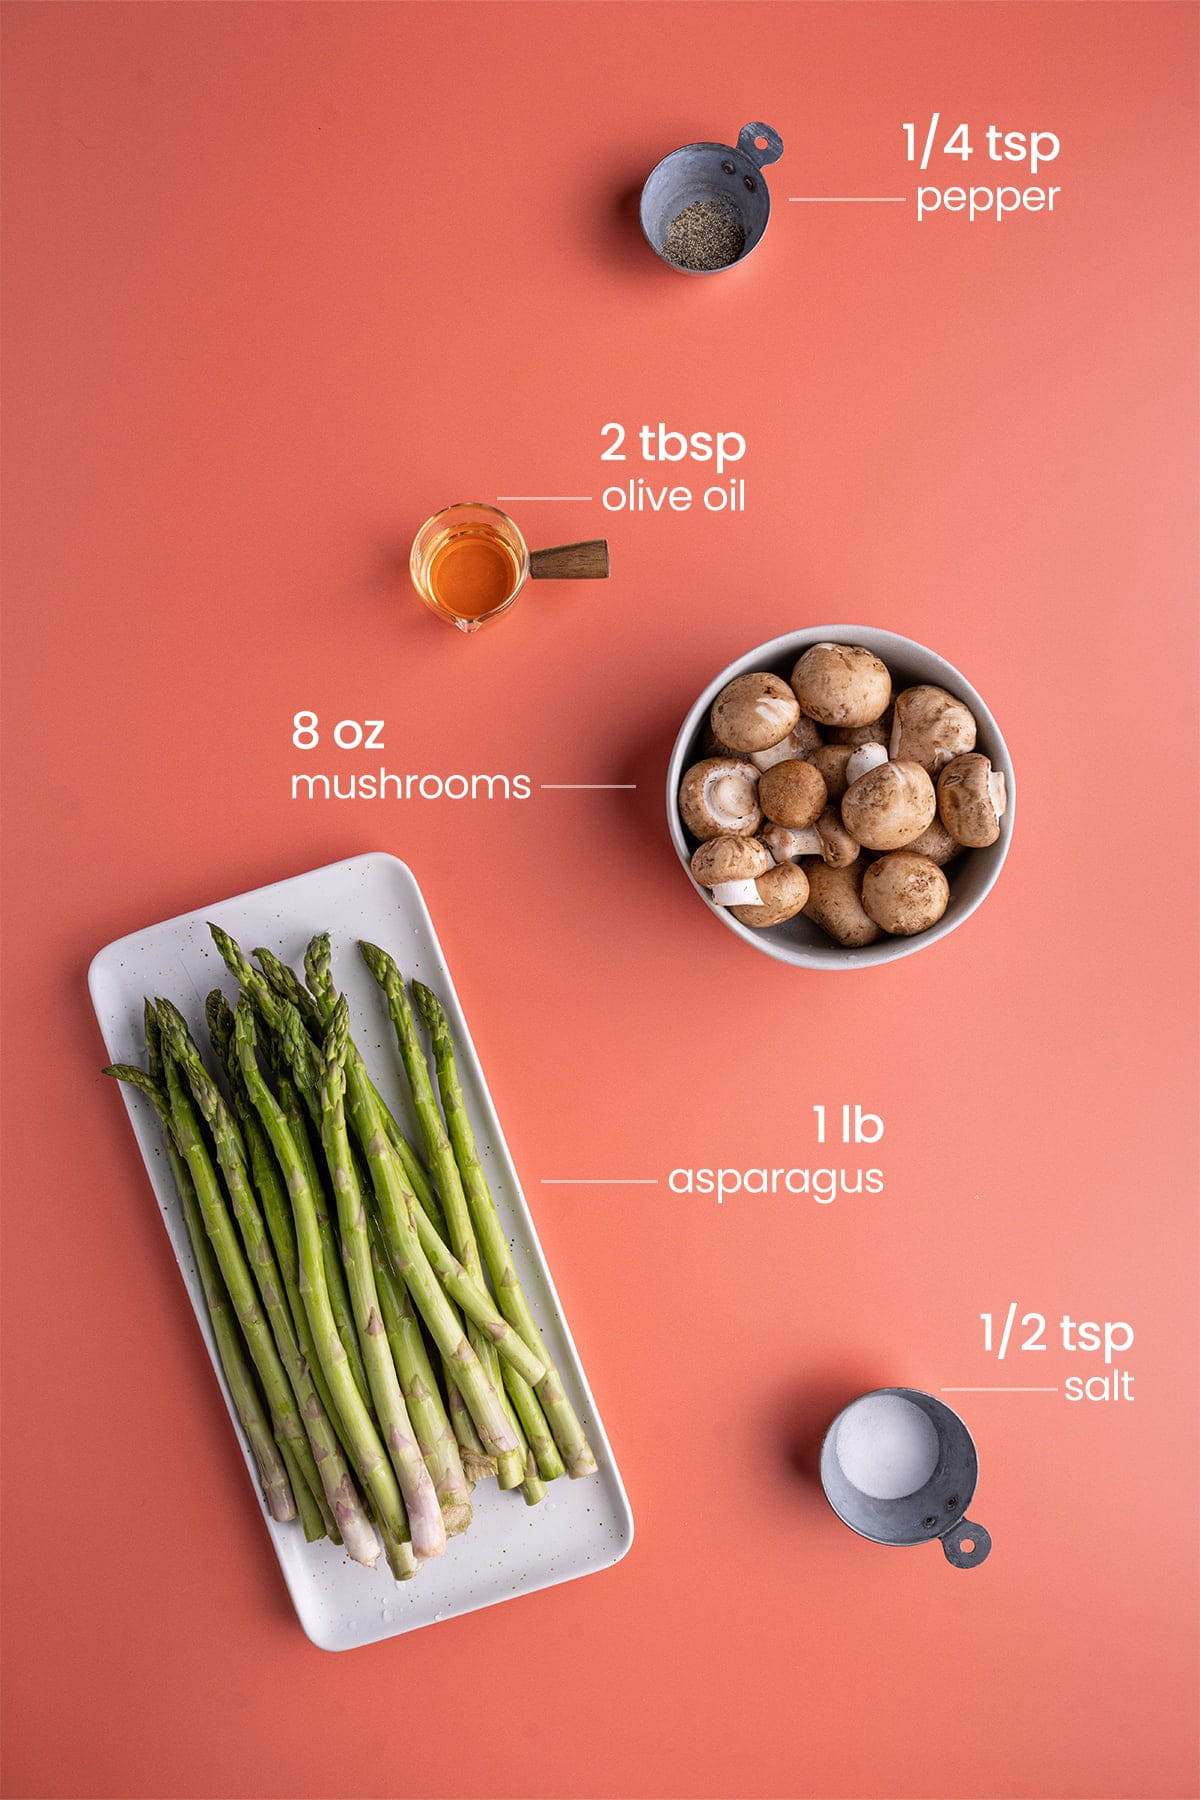 ingredients for roasted asparagus and mushrooms - pepper, olive oil, mushrooms, asparagus, salt